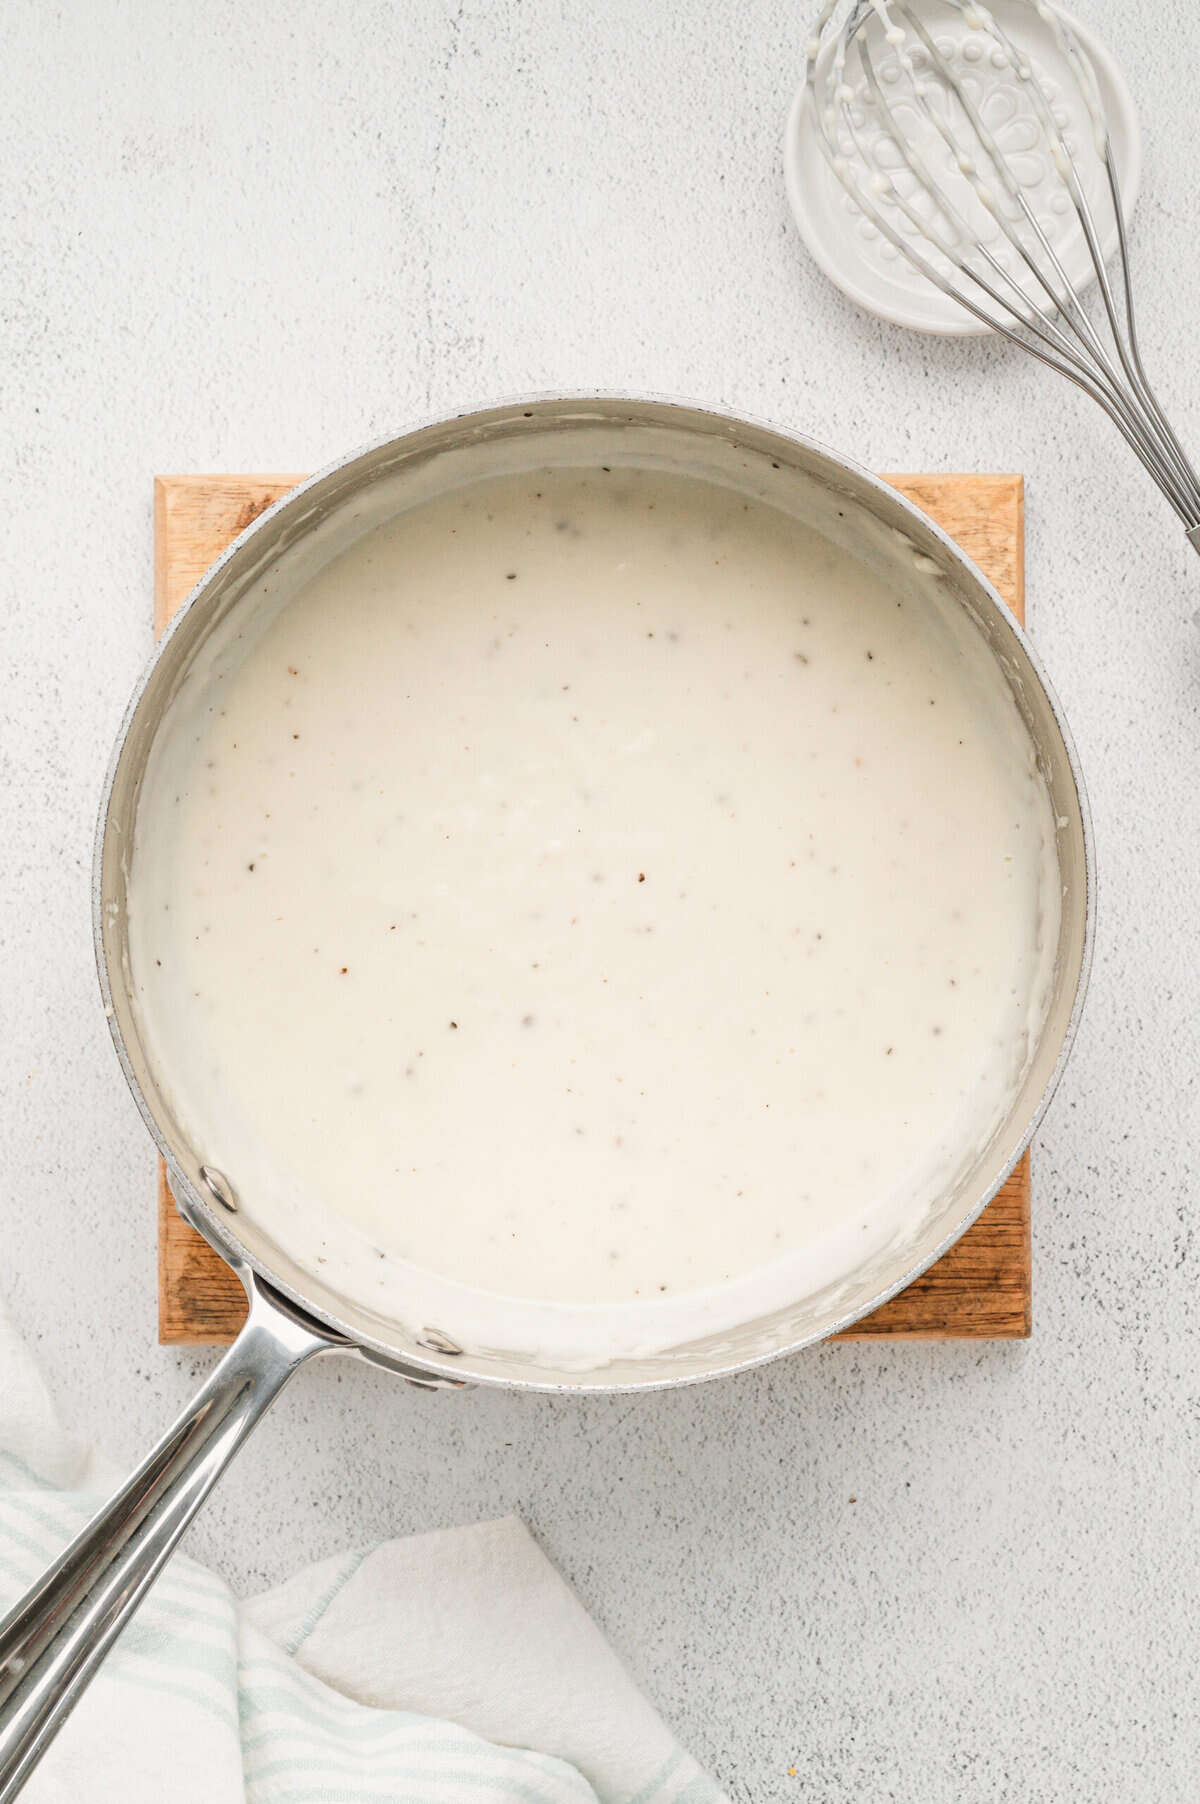 Gravy mixture in saucepan for Overnight Bicuits & Gravy Casserole recipe